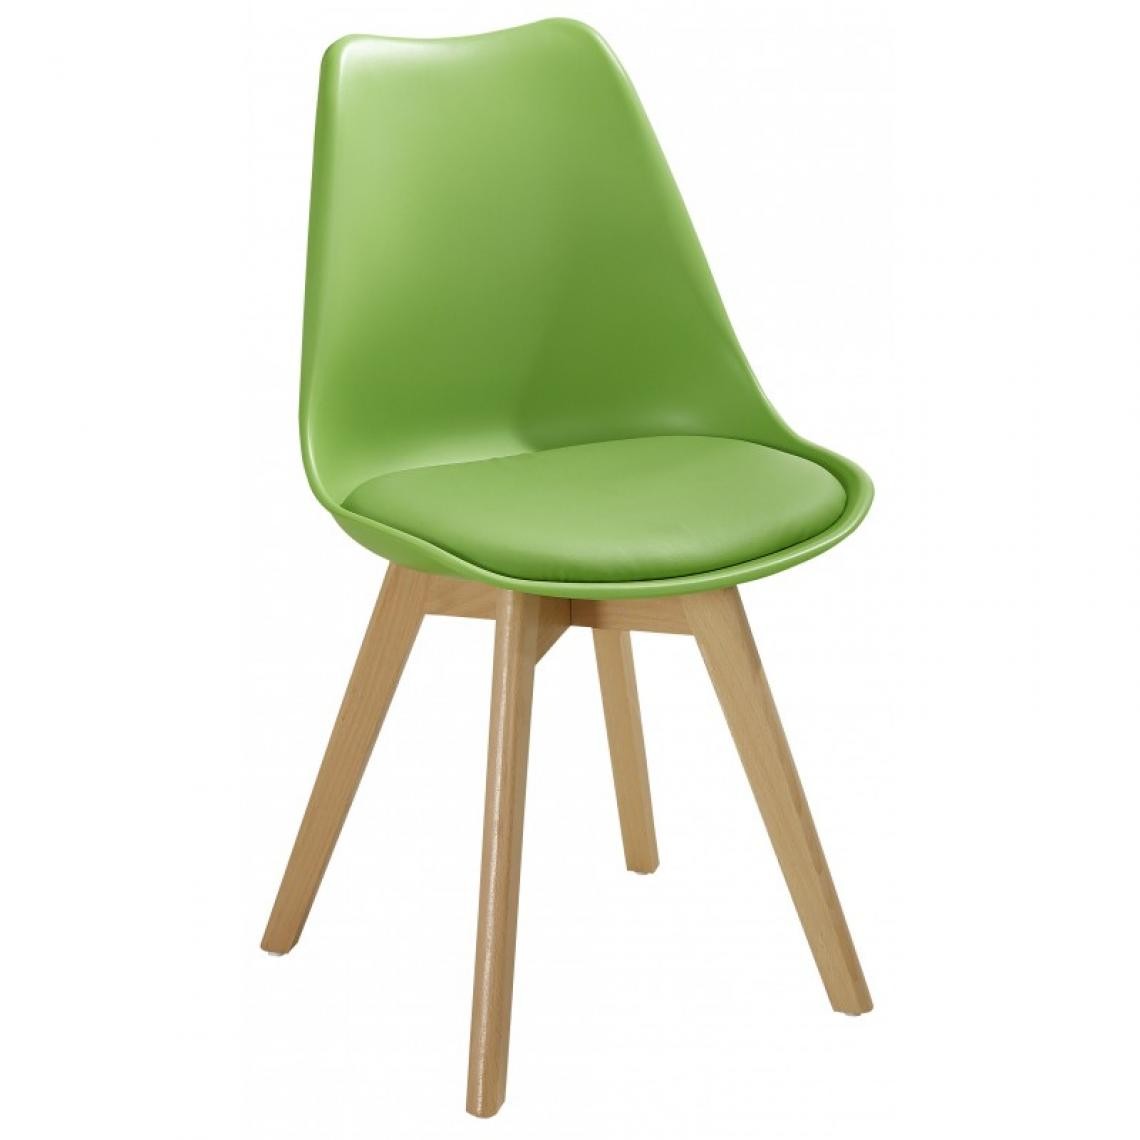 Webmarketpoint - Chaise moderne en polypropylène et bois Ligne Soft green - Chaises